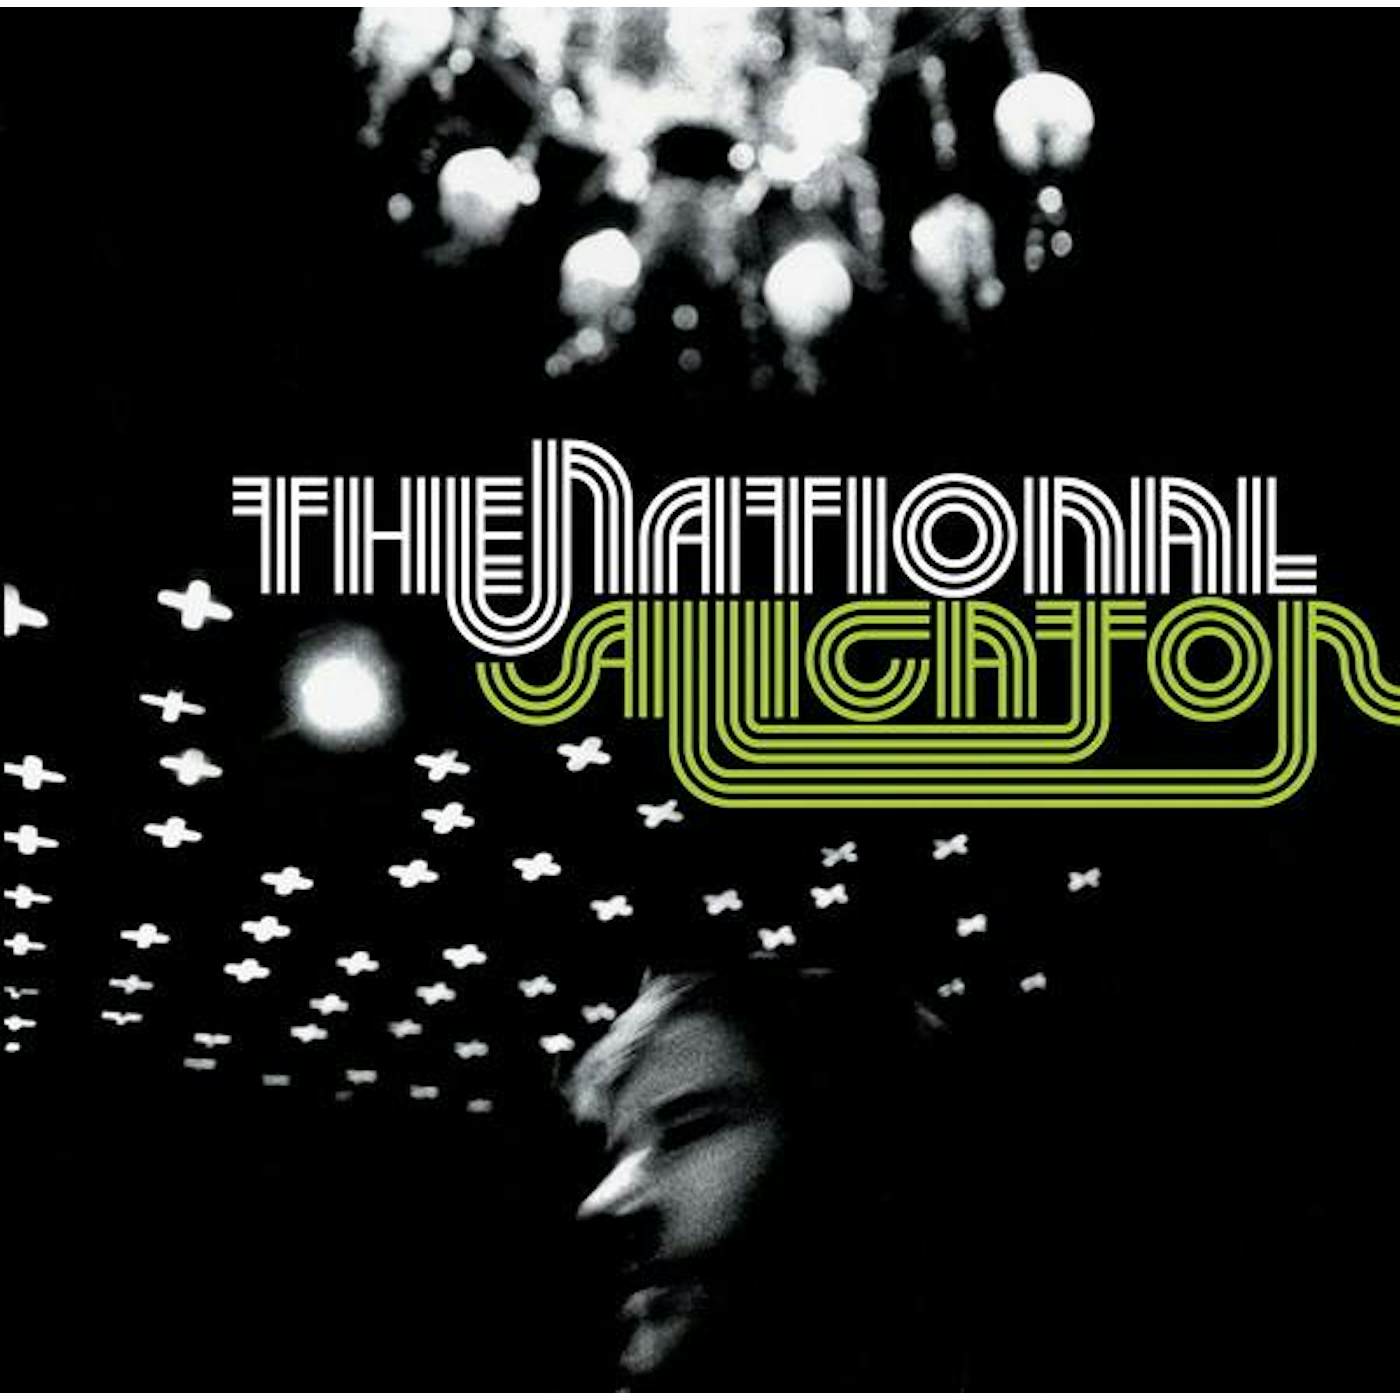 The National Alligator Vinyl Record